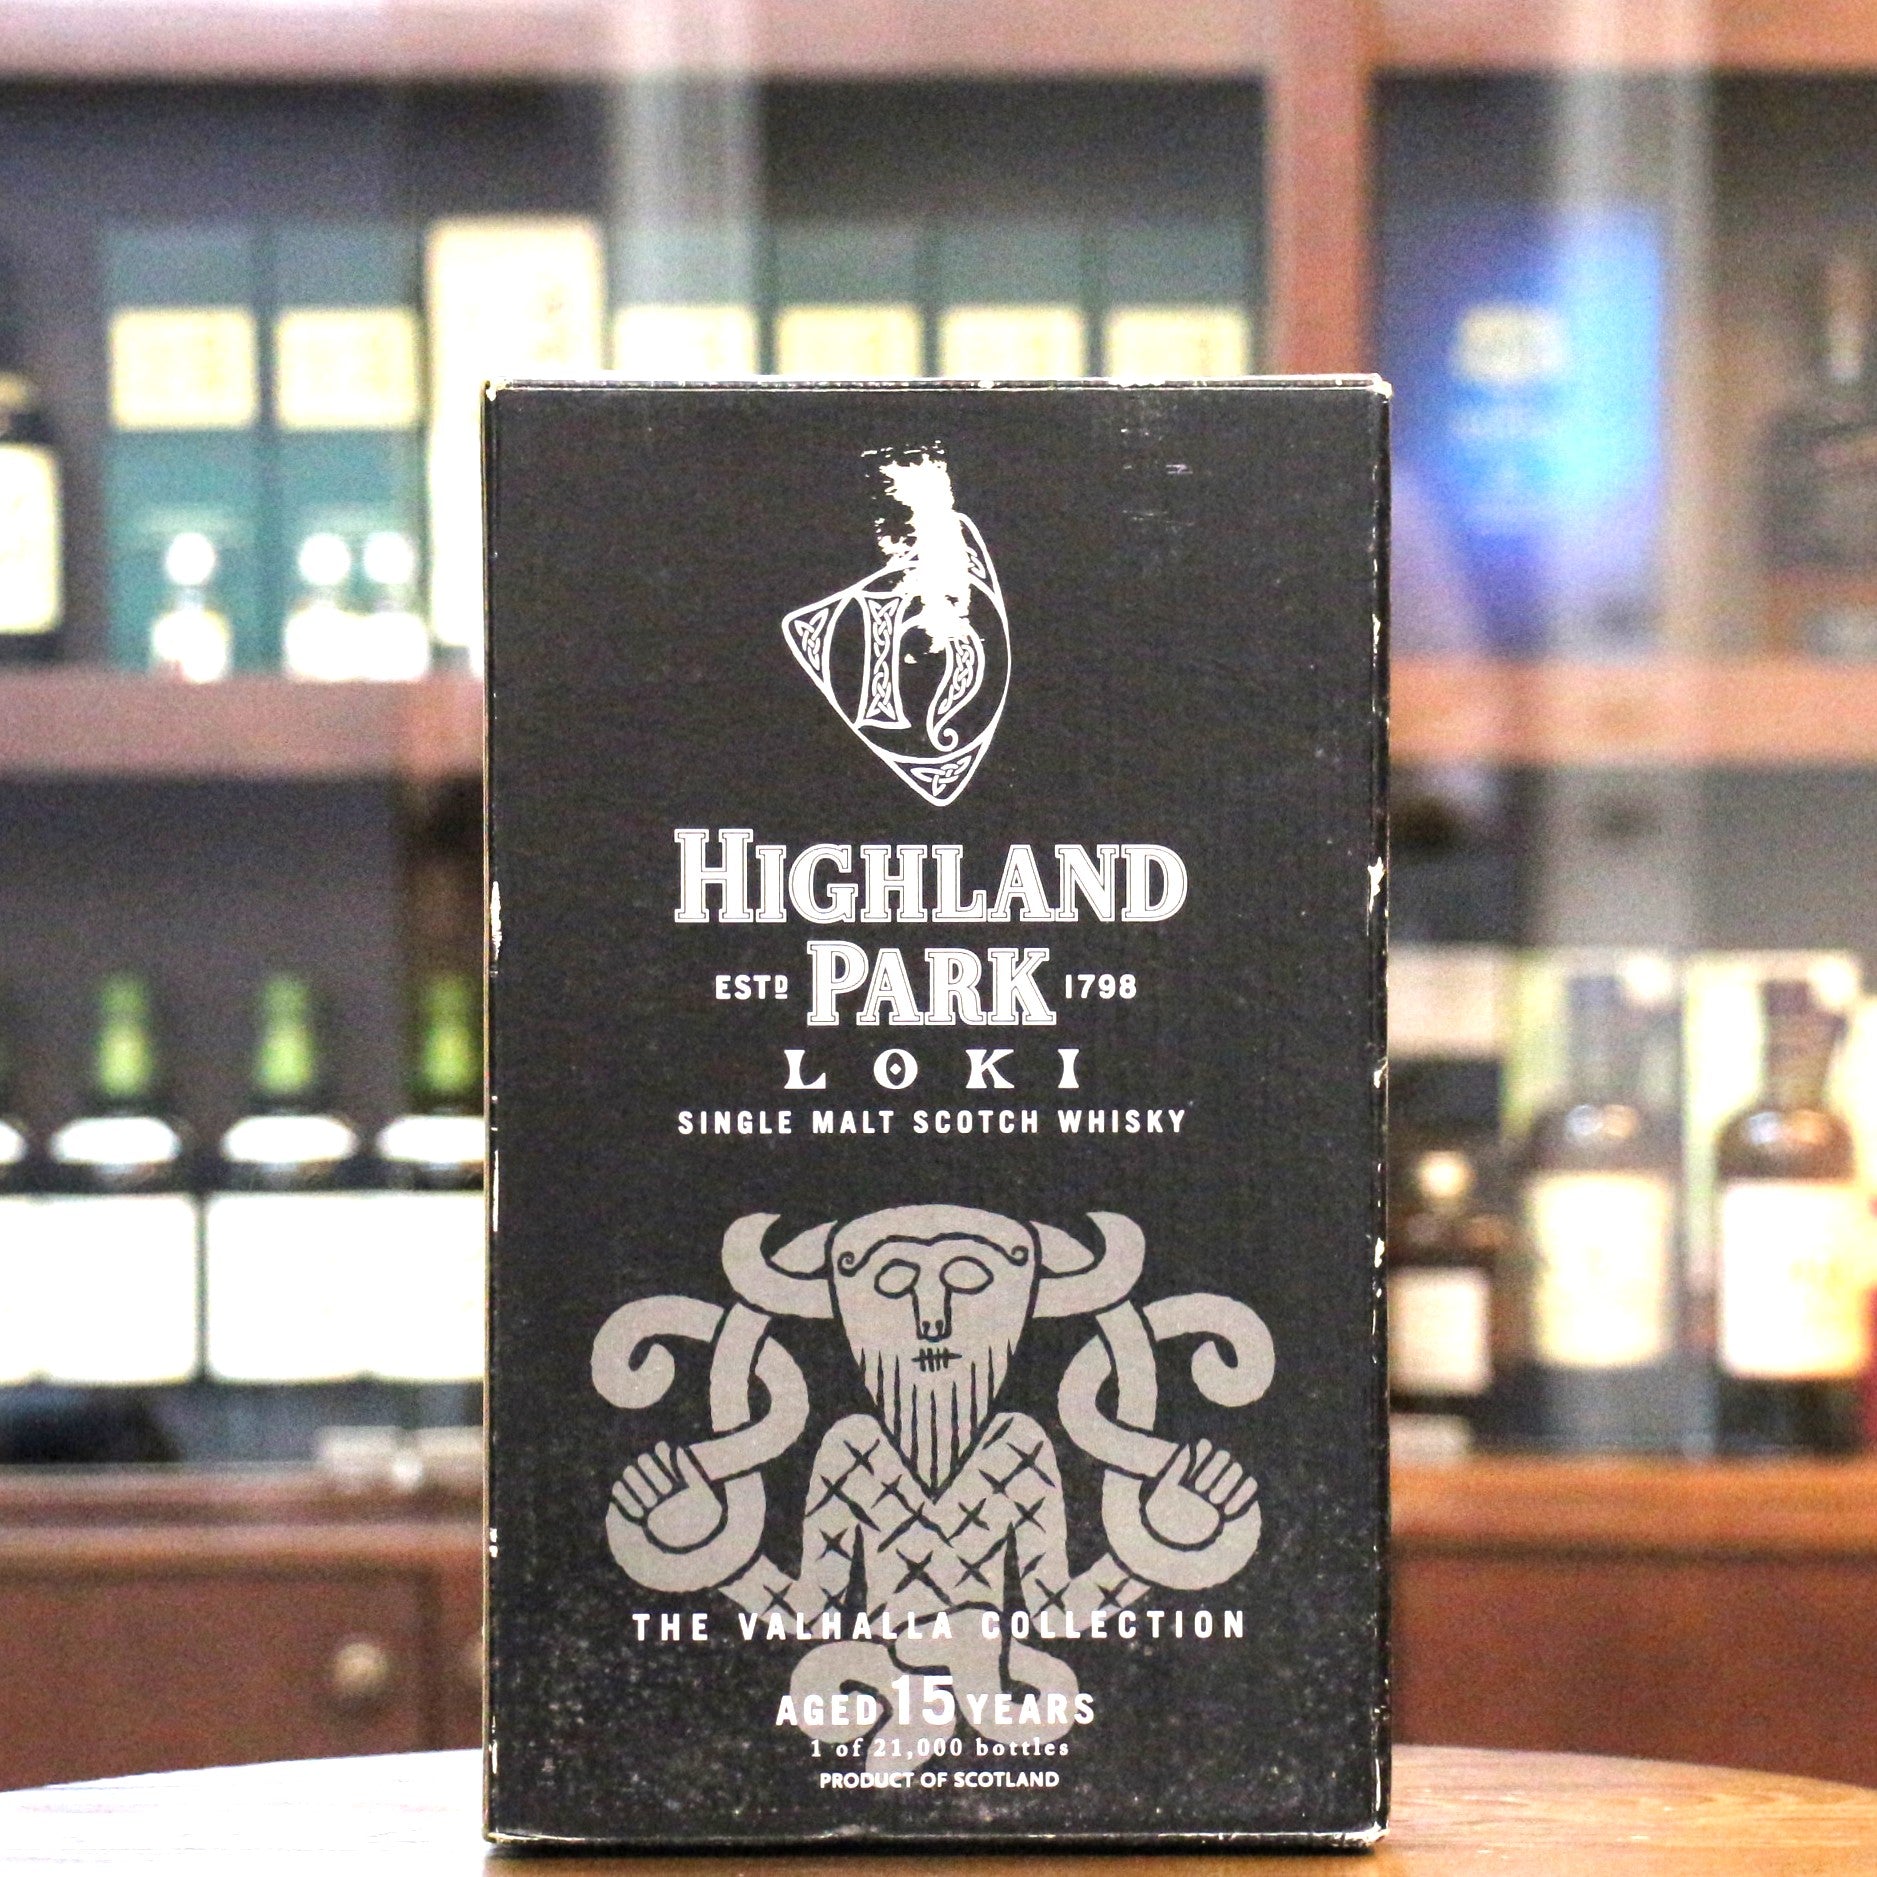 Highland Park Loki 15 Years Old Single Malt Scotch Whisky